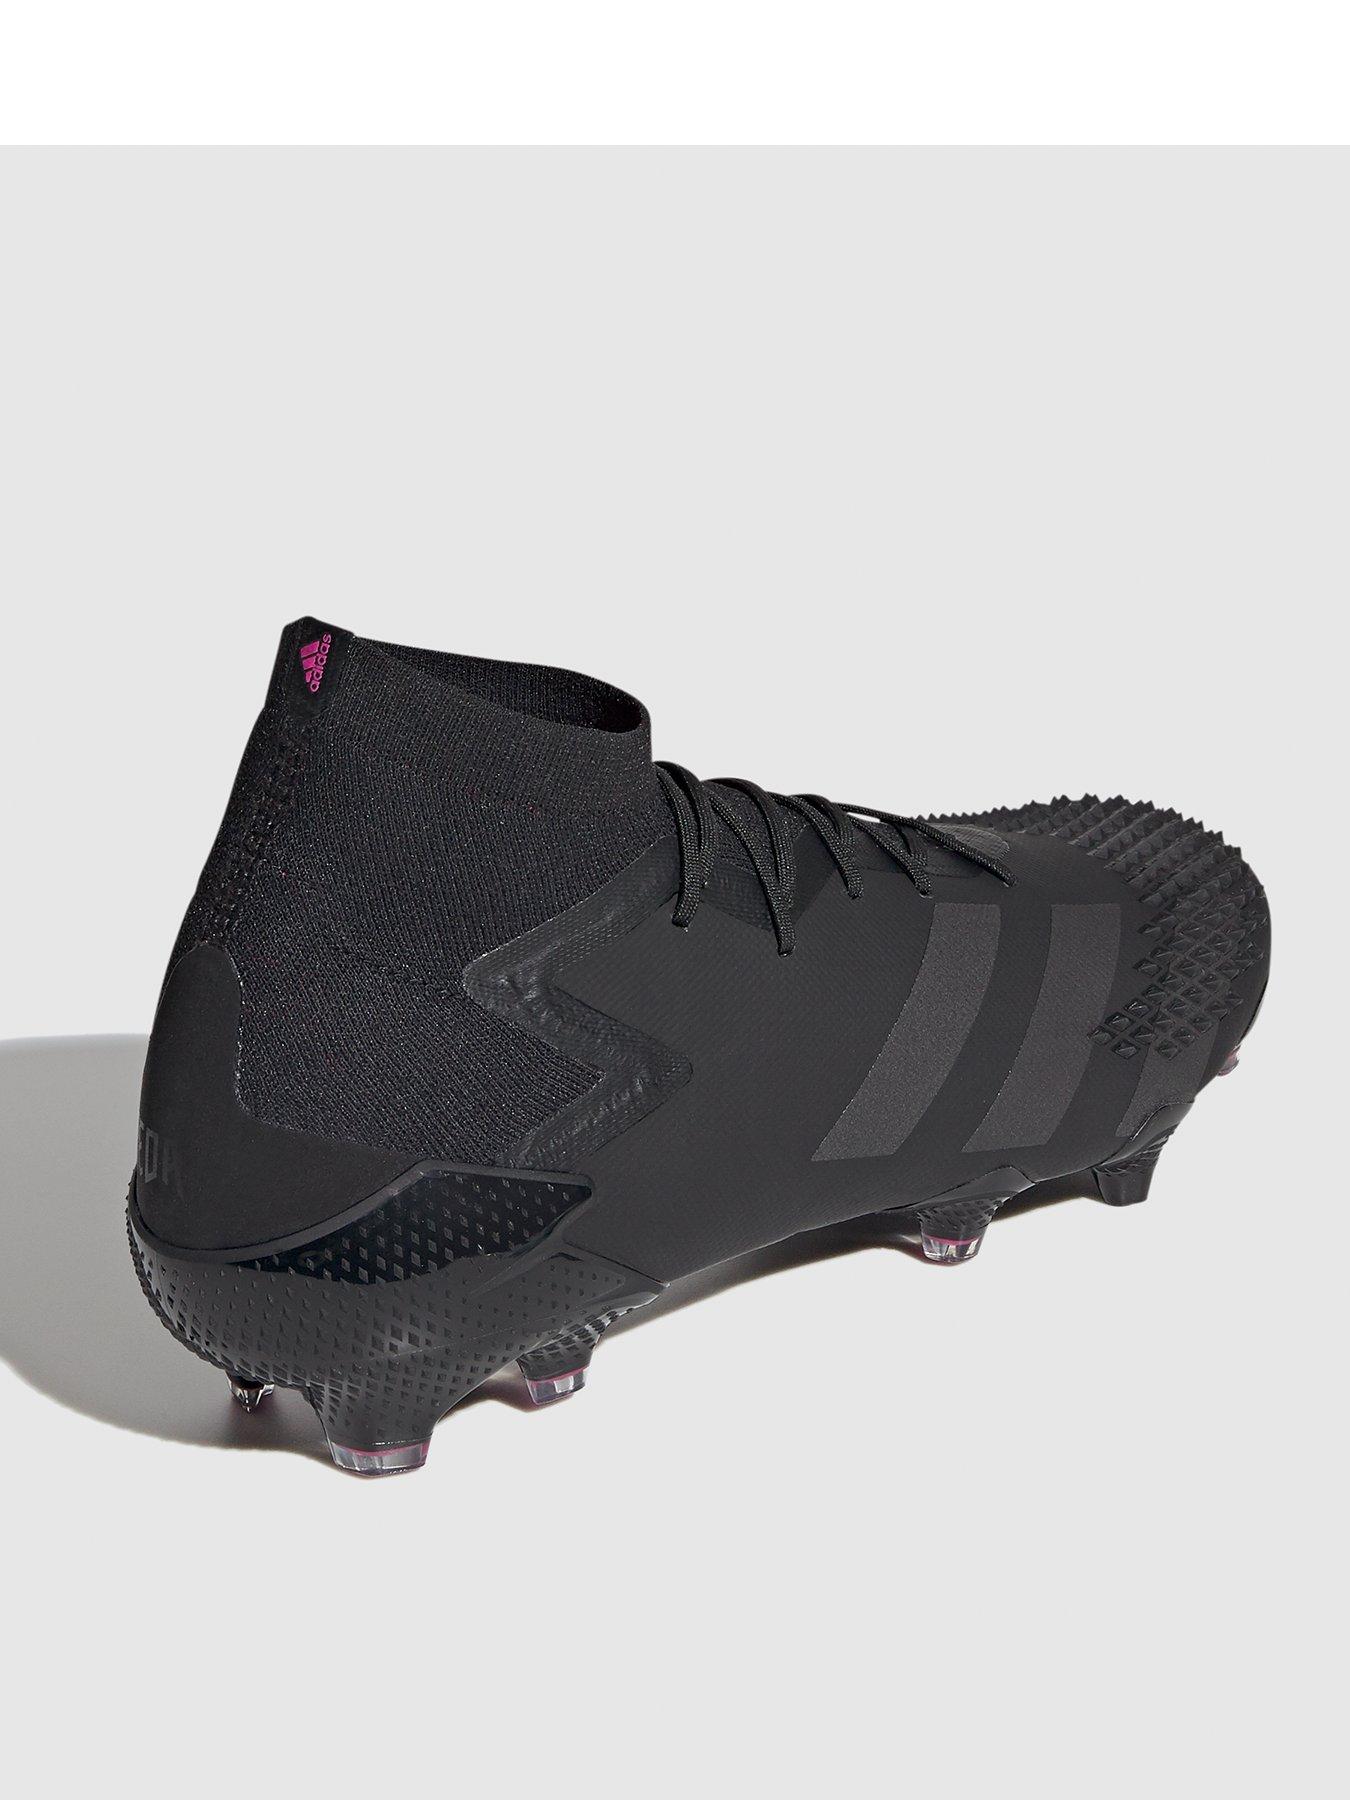 black adidas predator boots